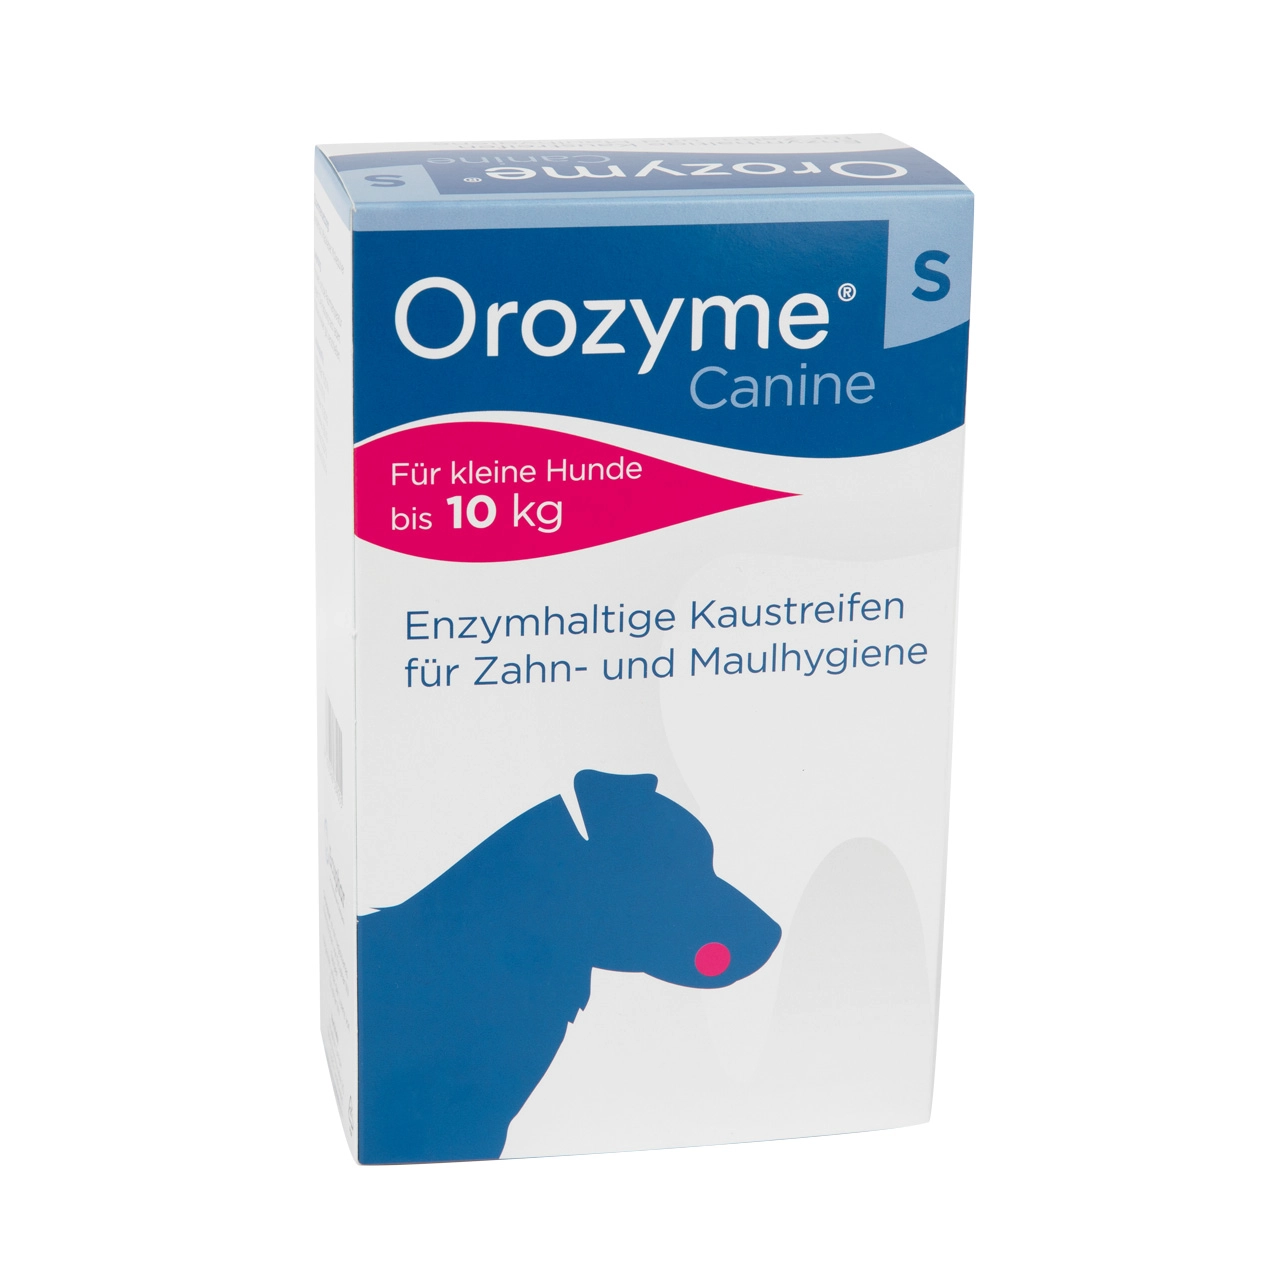 Orozyme Canine - Kaustreifen zur Zahnpflege